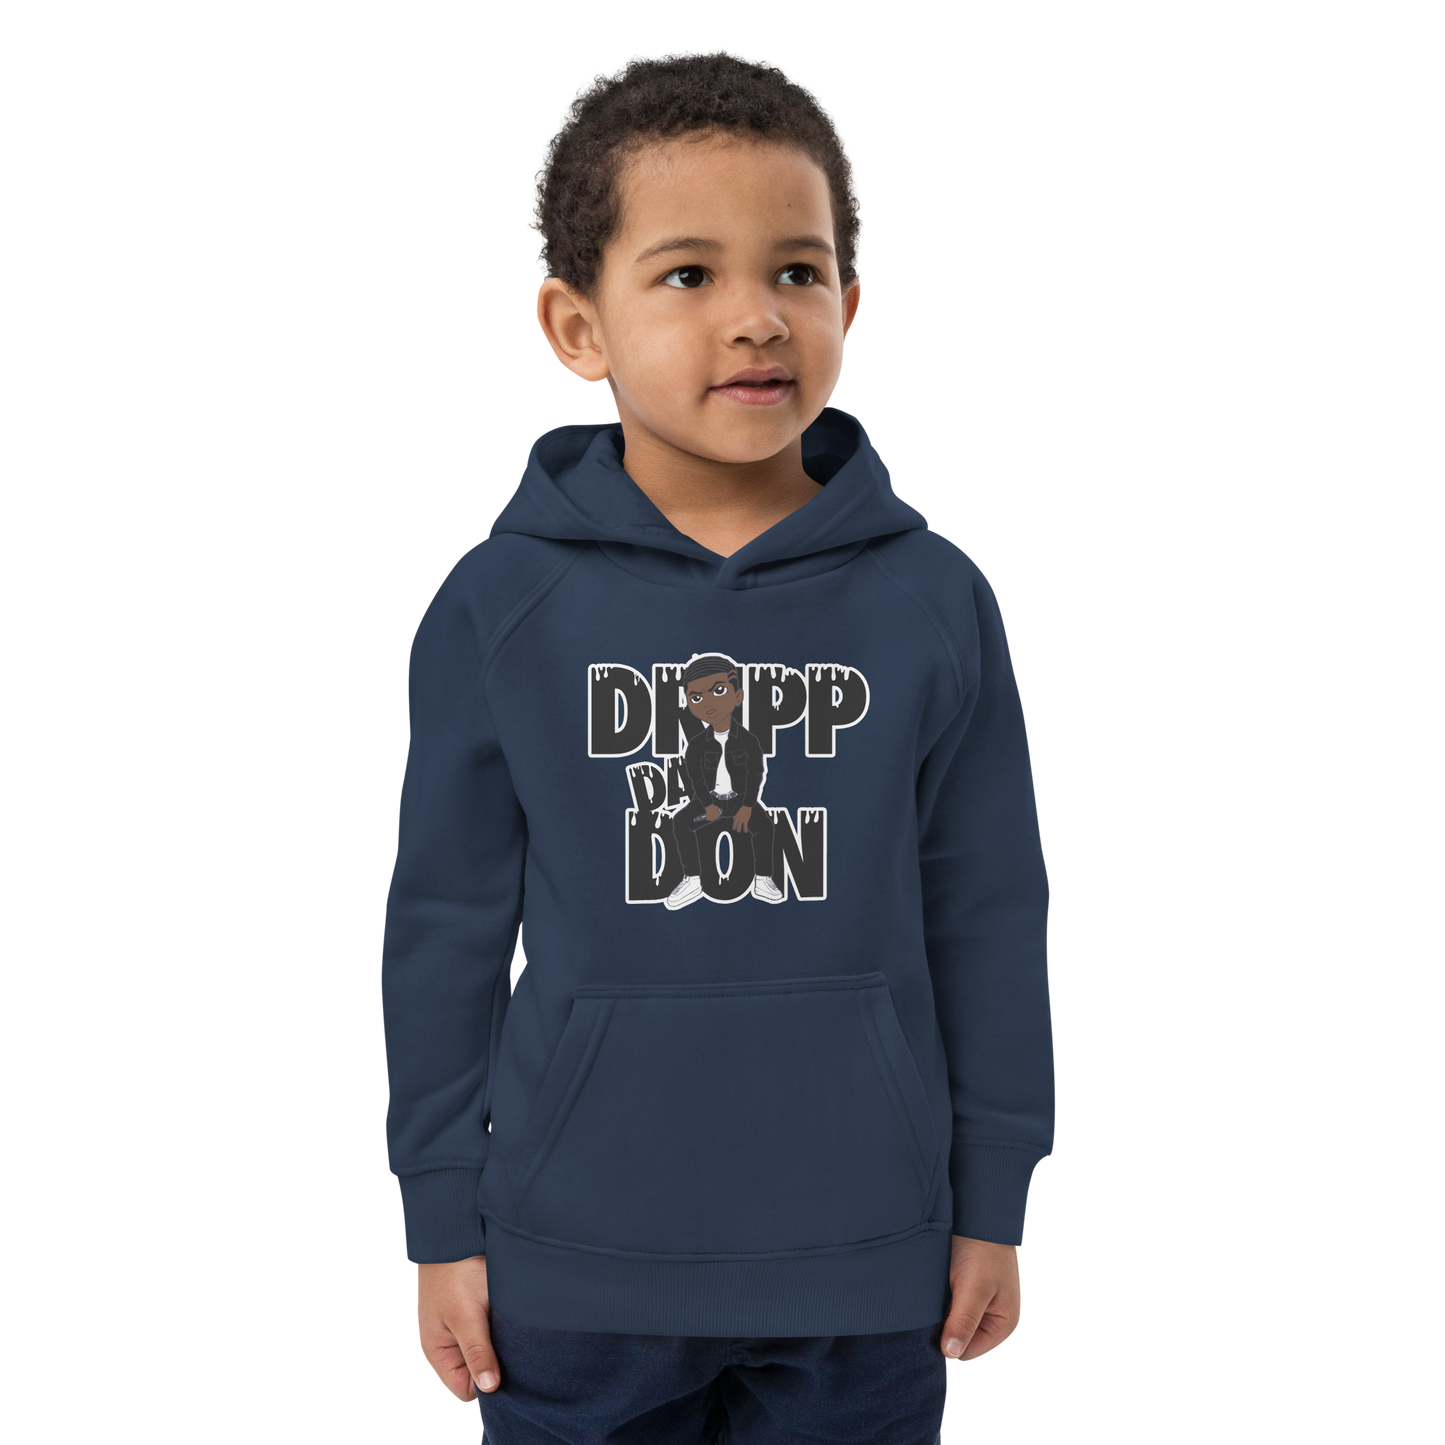 Dripp's Classic Kids eco hoodie